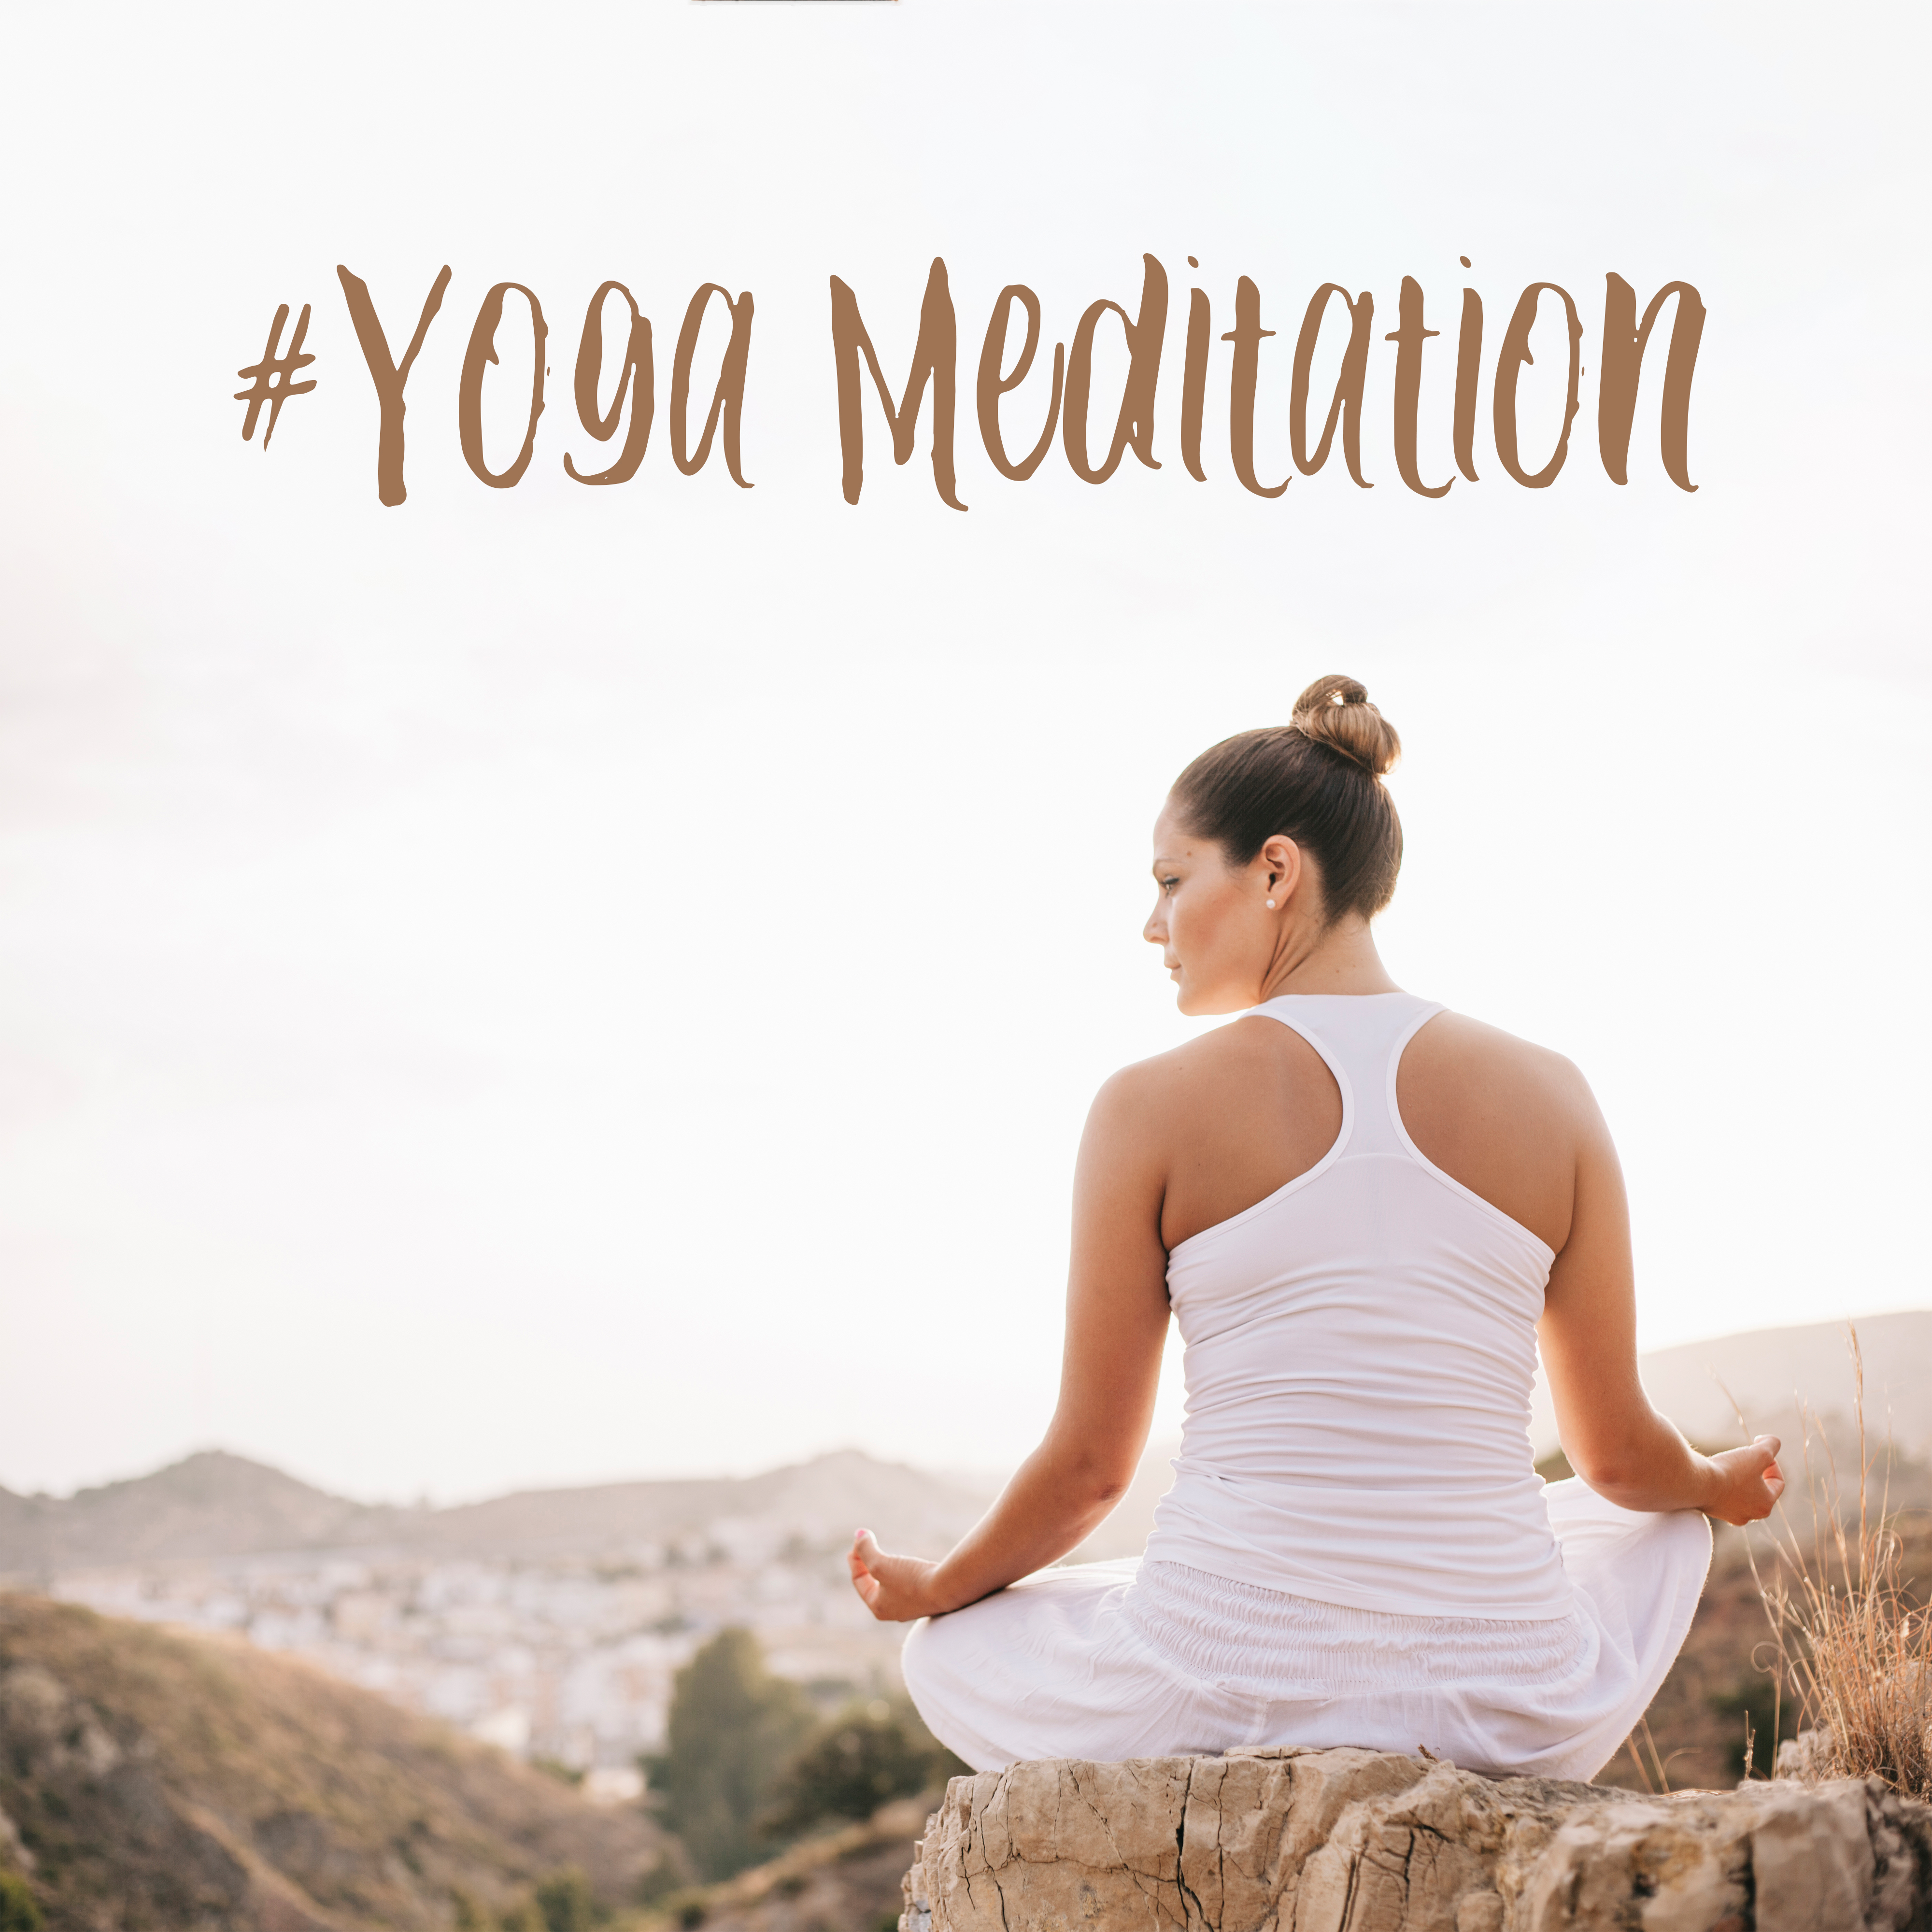 #Yoga Meditation